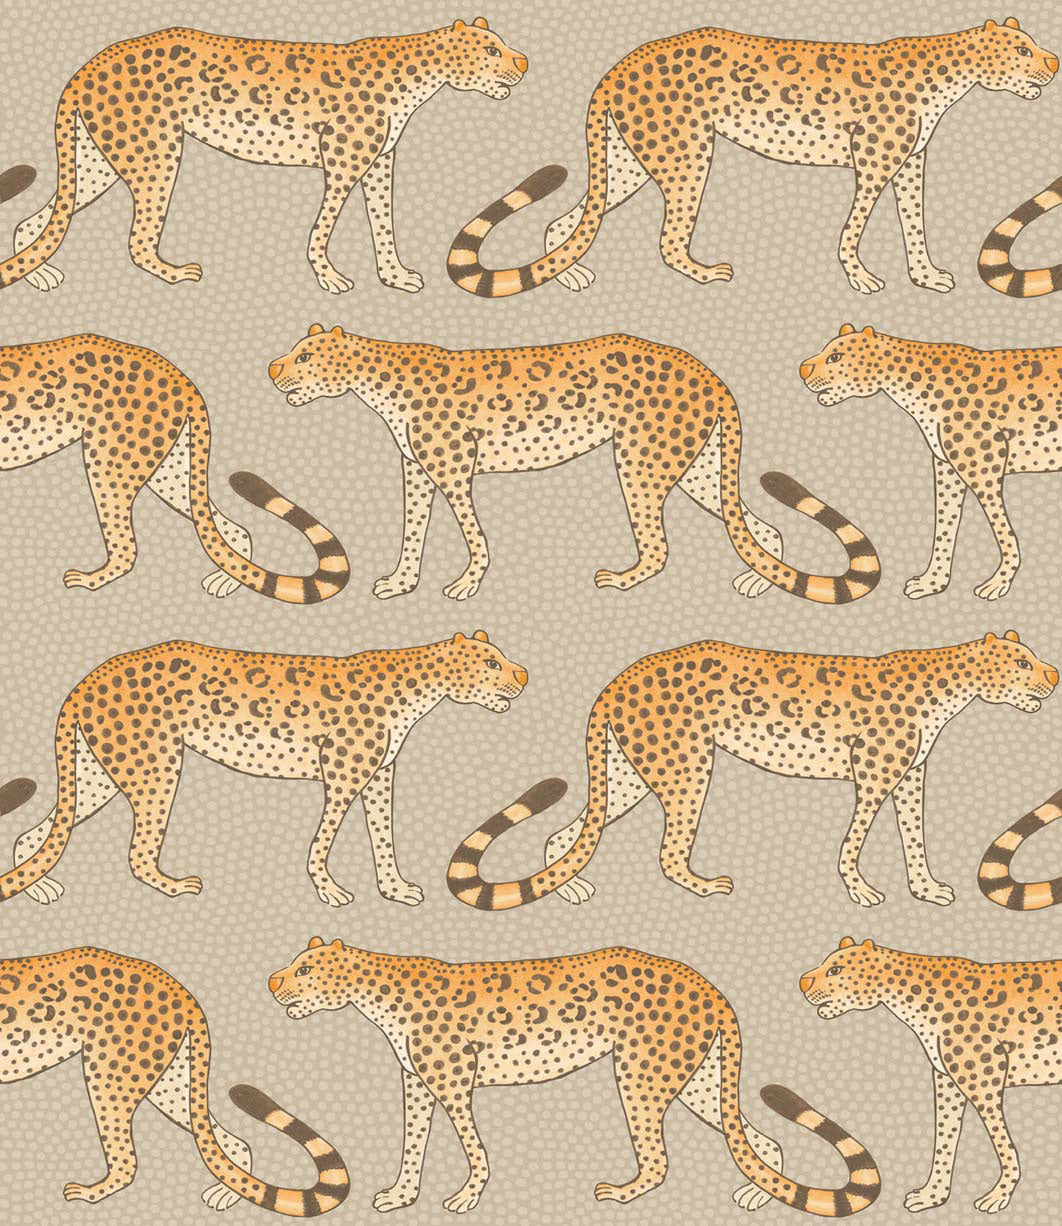 Leopard Walk - Orange